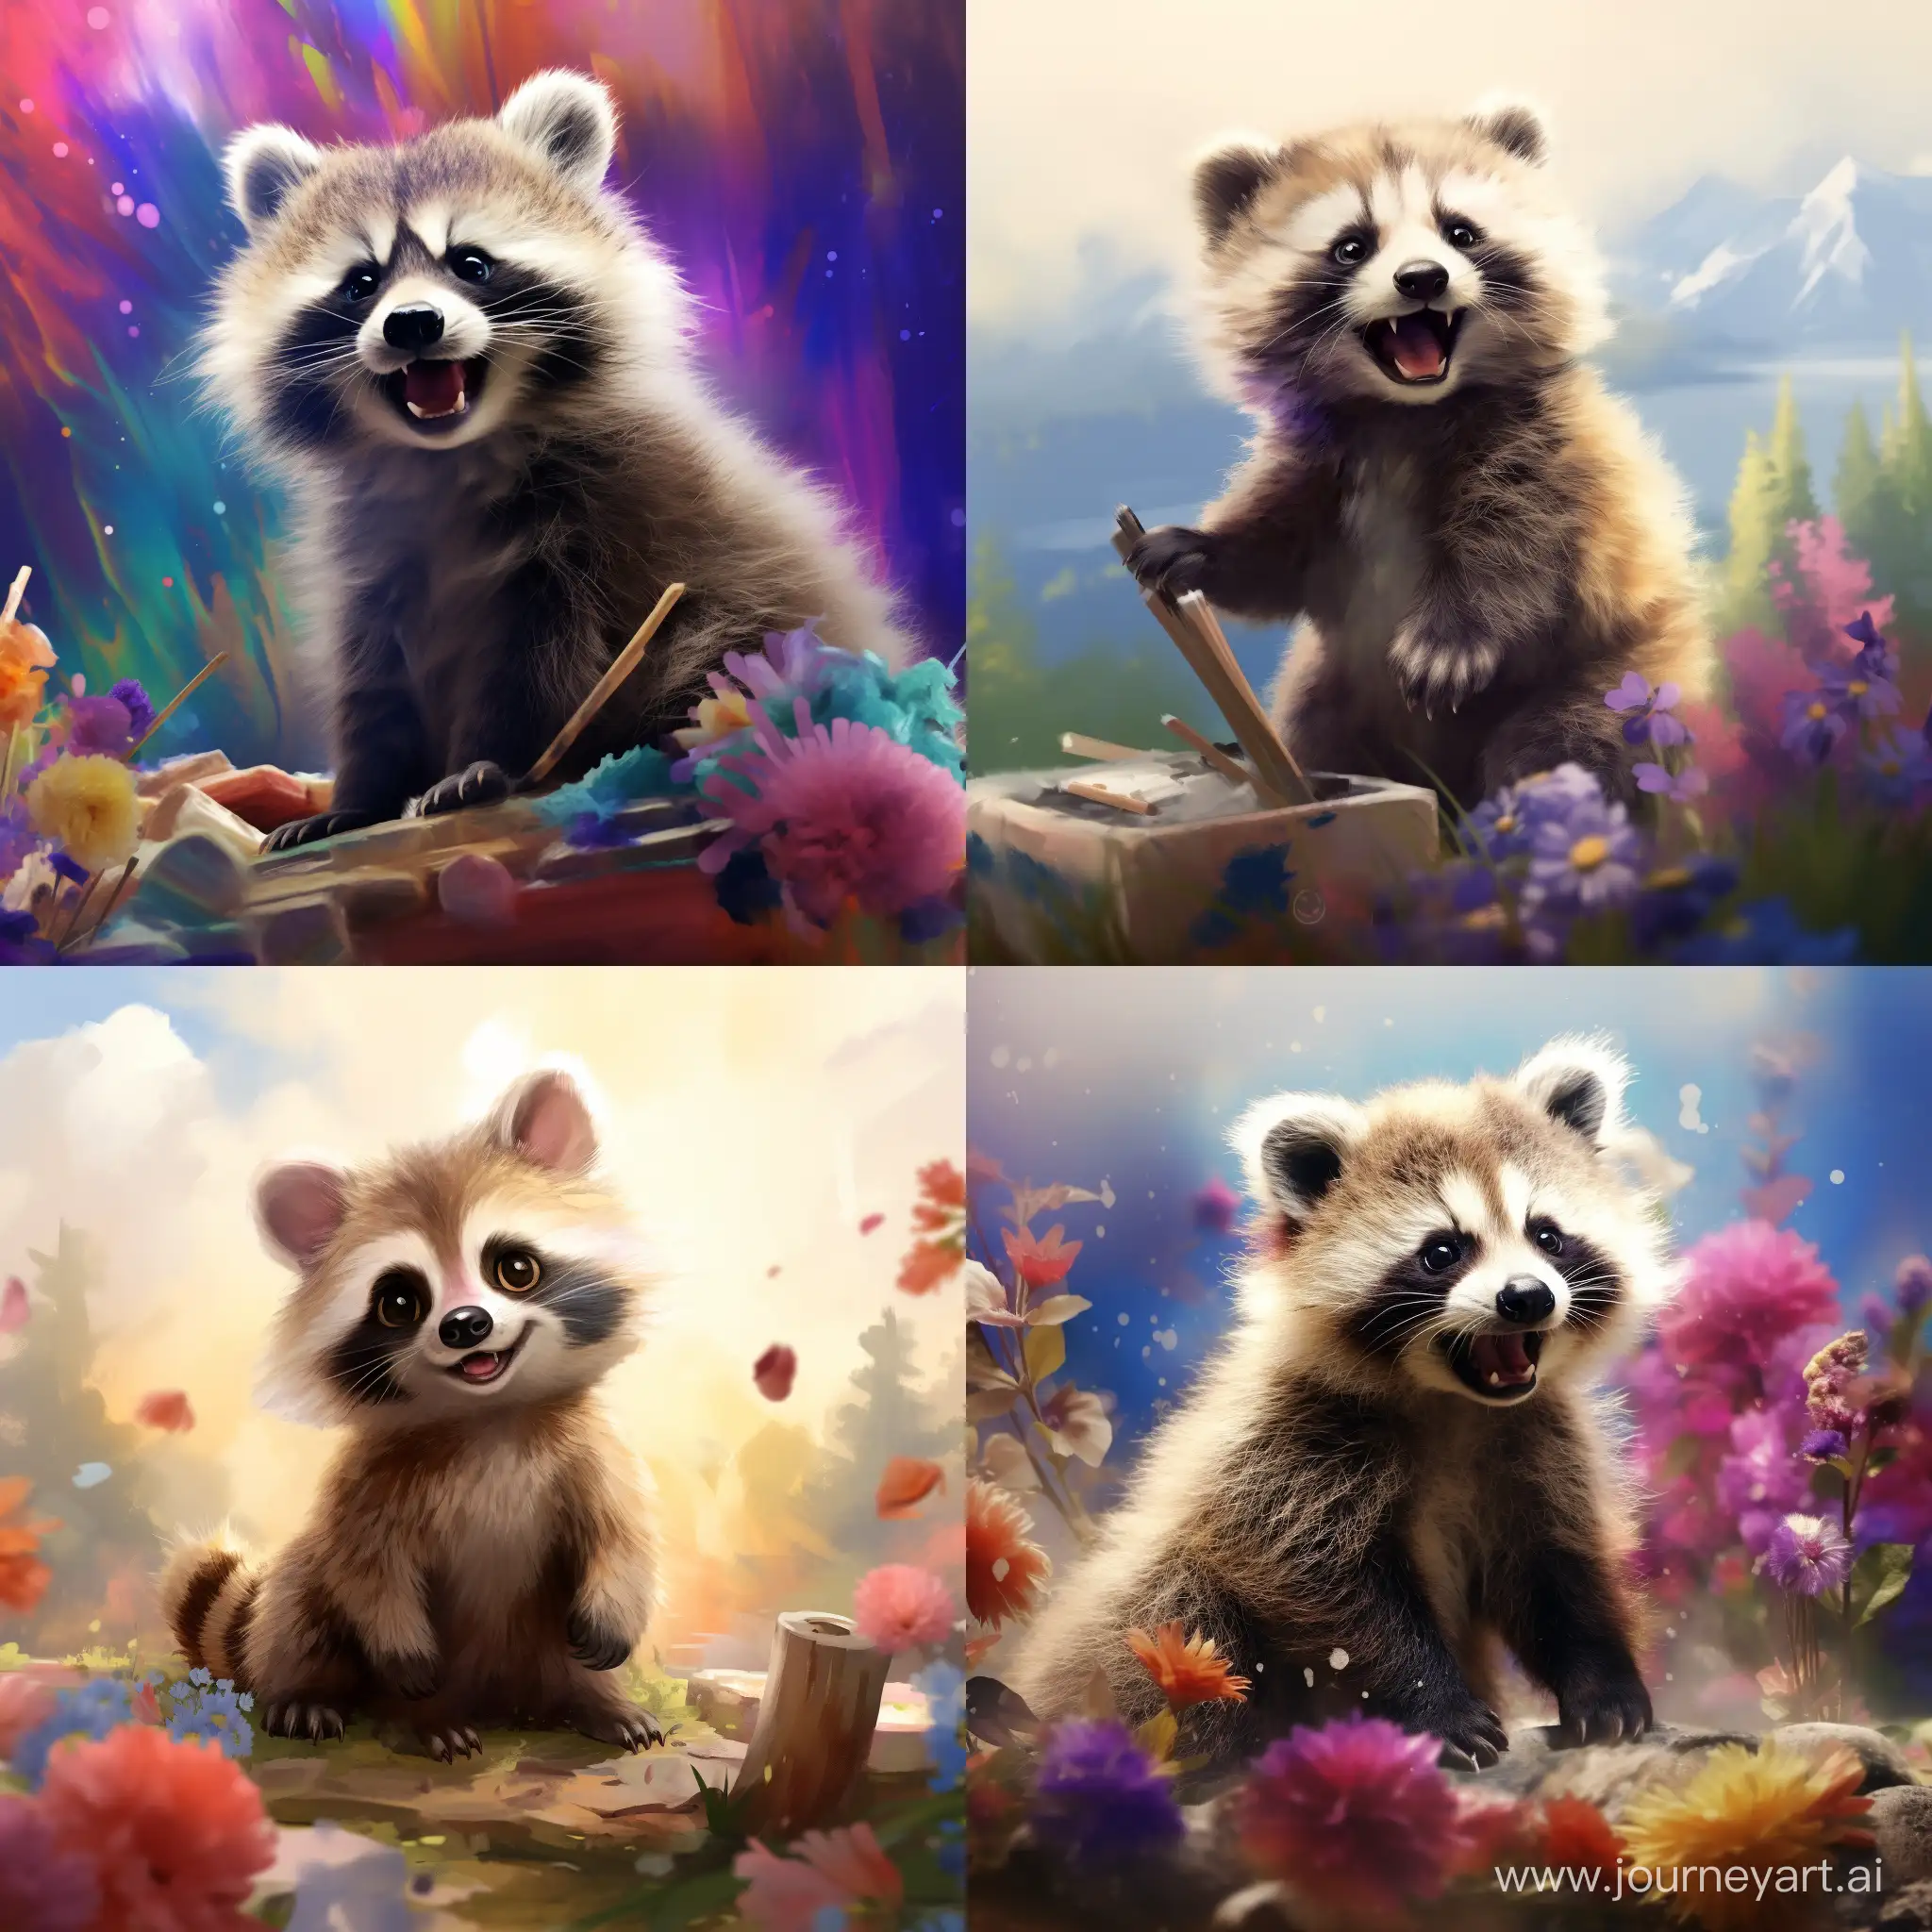 Adorable-Baby-Raccoon-Growling-in-Serene-Watercolor-Painting-Scene